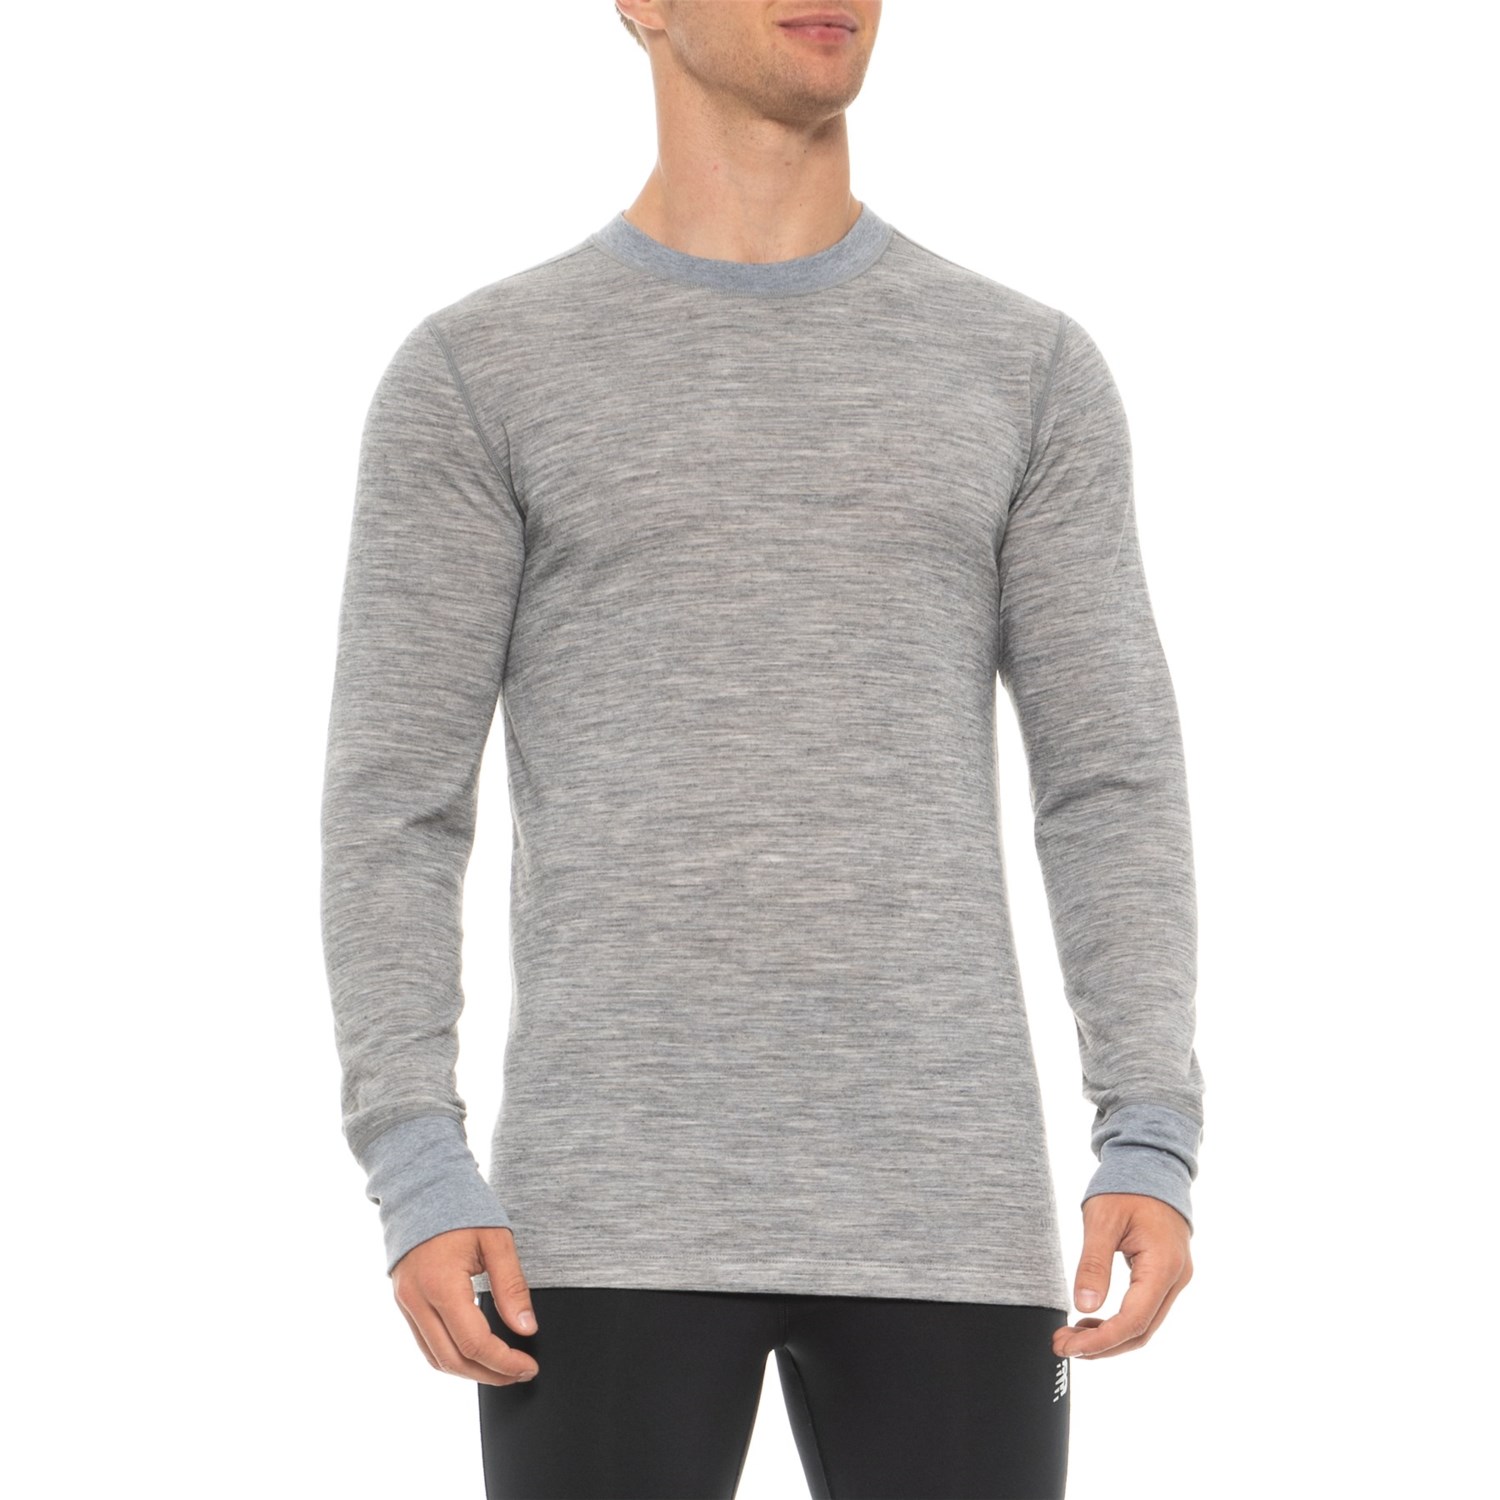 aspen-2-layer-base-layer-top-merino-wool-blend-long-sleeve-for-men-in-heather-grey~p~475df_01~1500.2.jpg